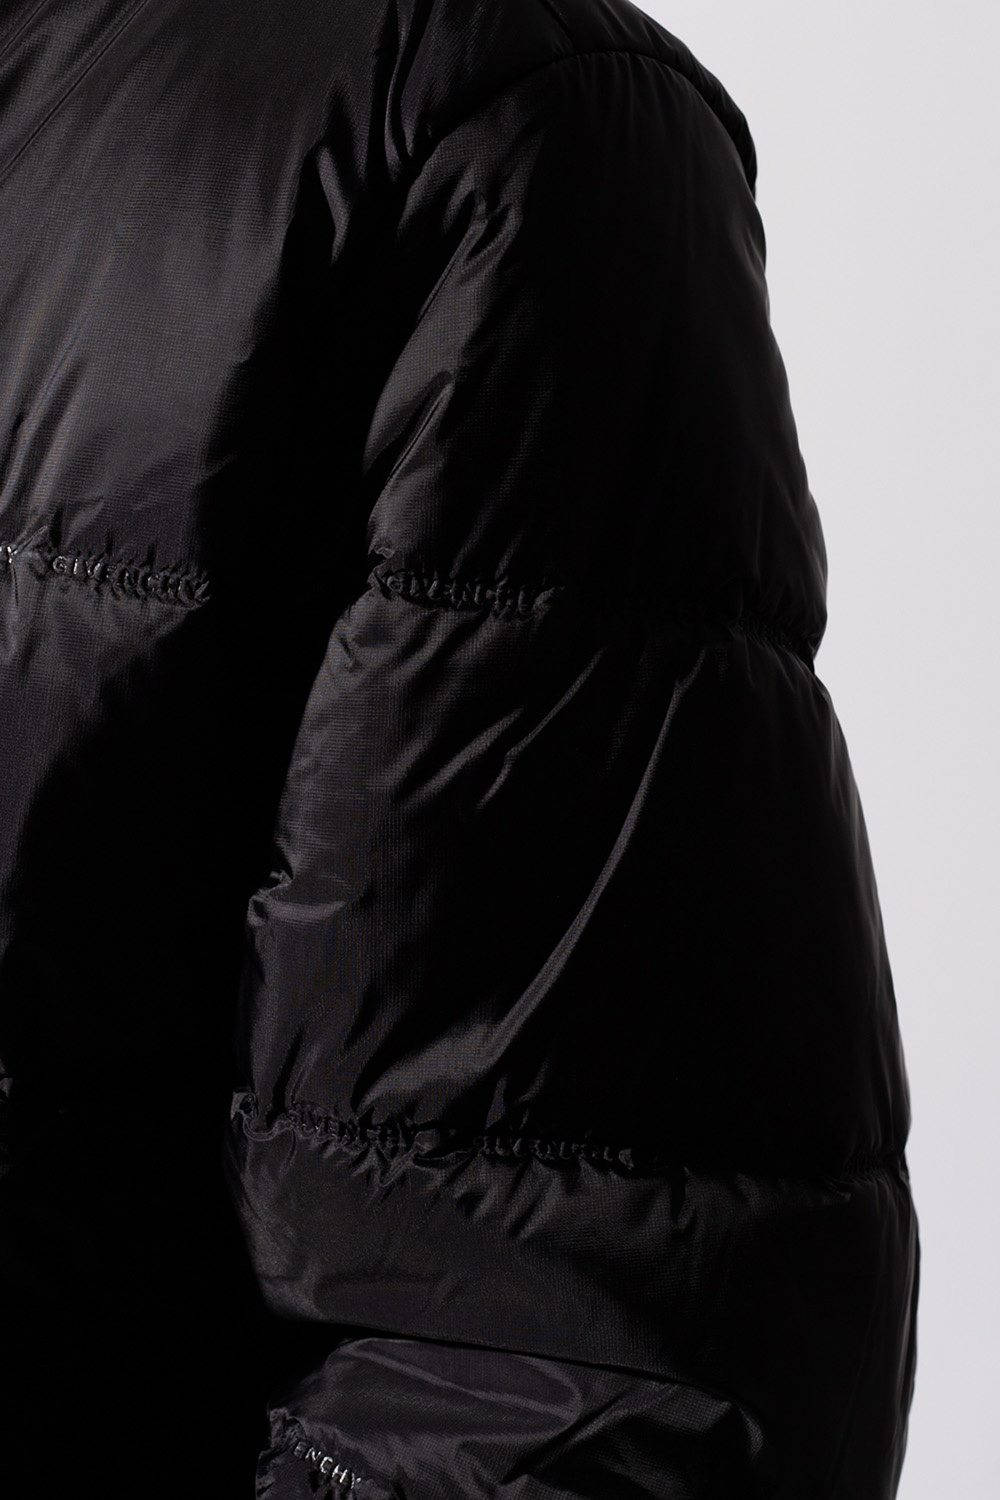 Givenchy givenchy collar logo track jacket